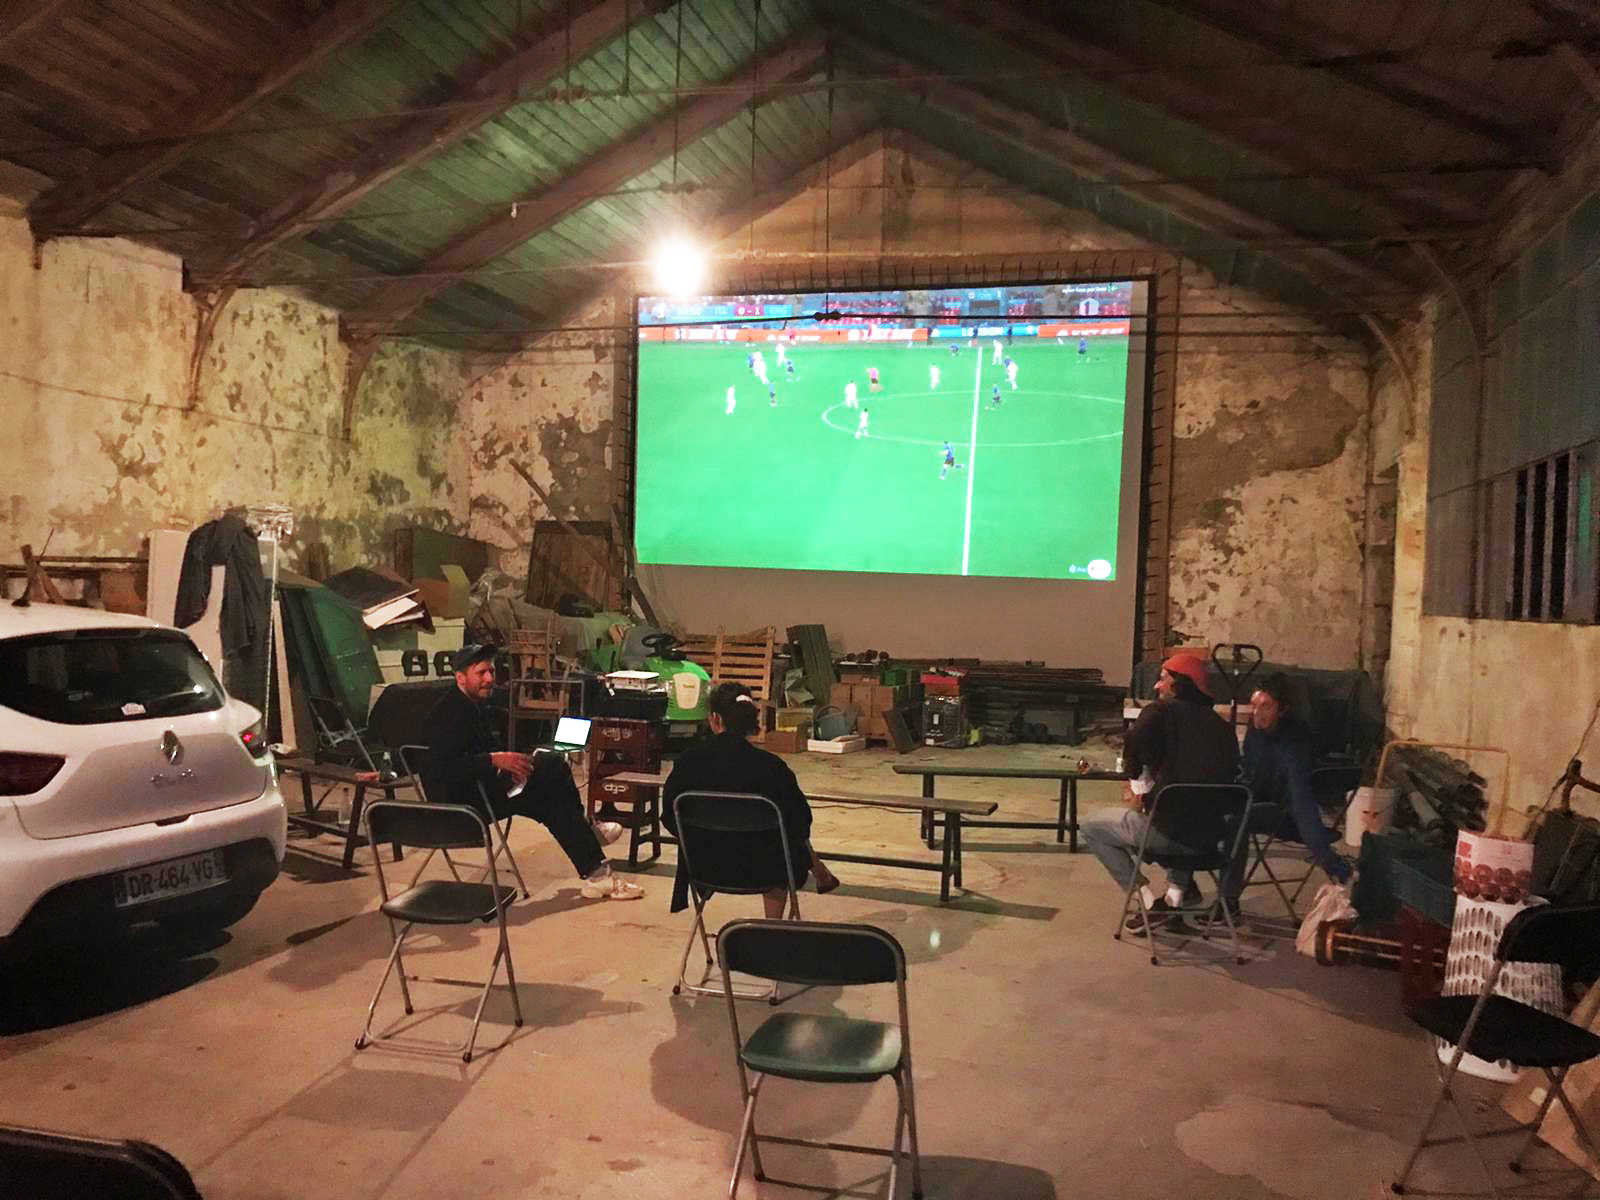 DAI crew watching the European Championship match 2021 in PAF's barn. Photo credit: Jacq van der Spek.